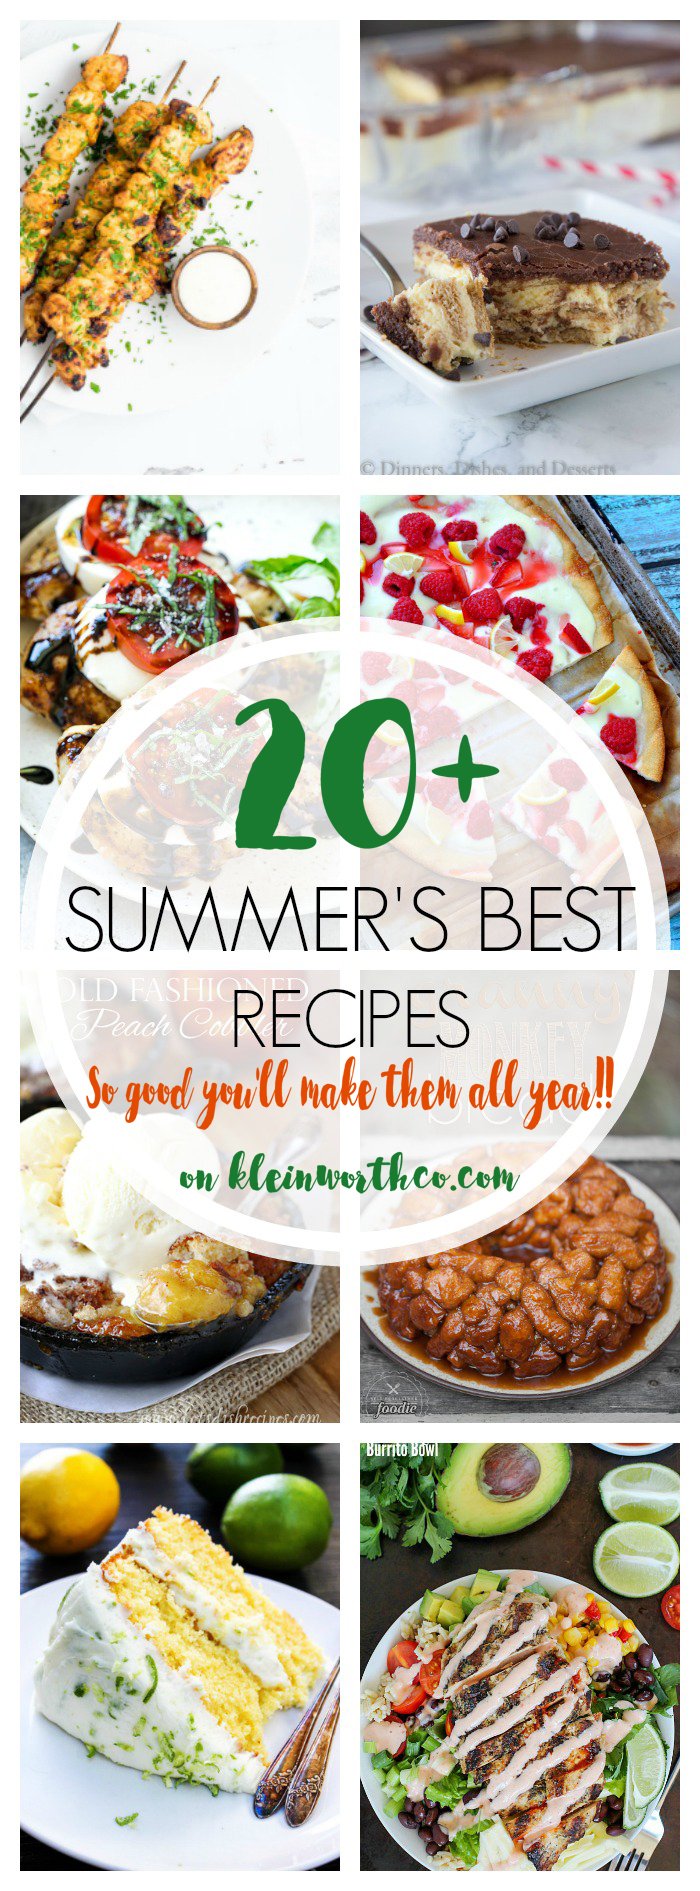 Summers Best Recipes